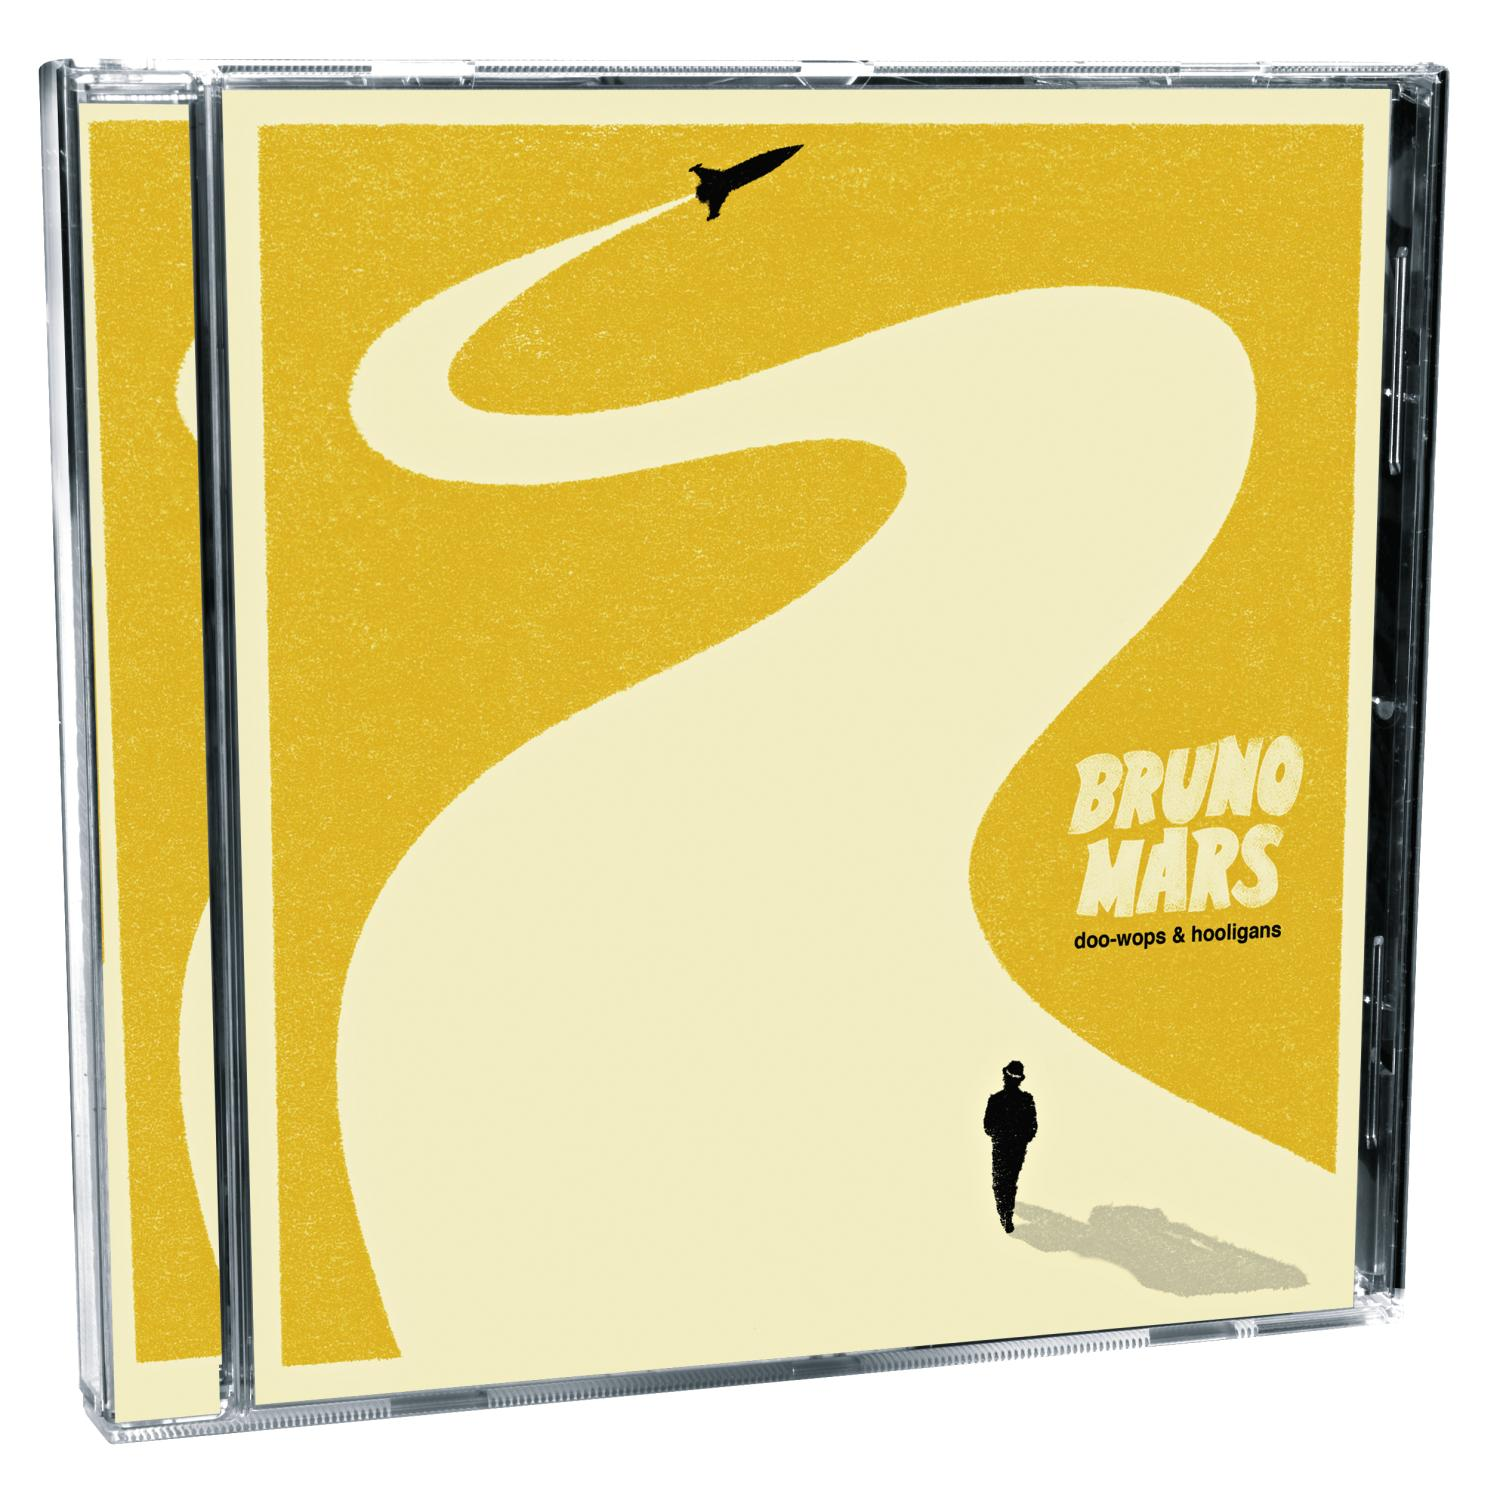 Doo-Wops (CD) - - Hooligans Bruno + Mars